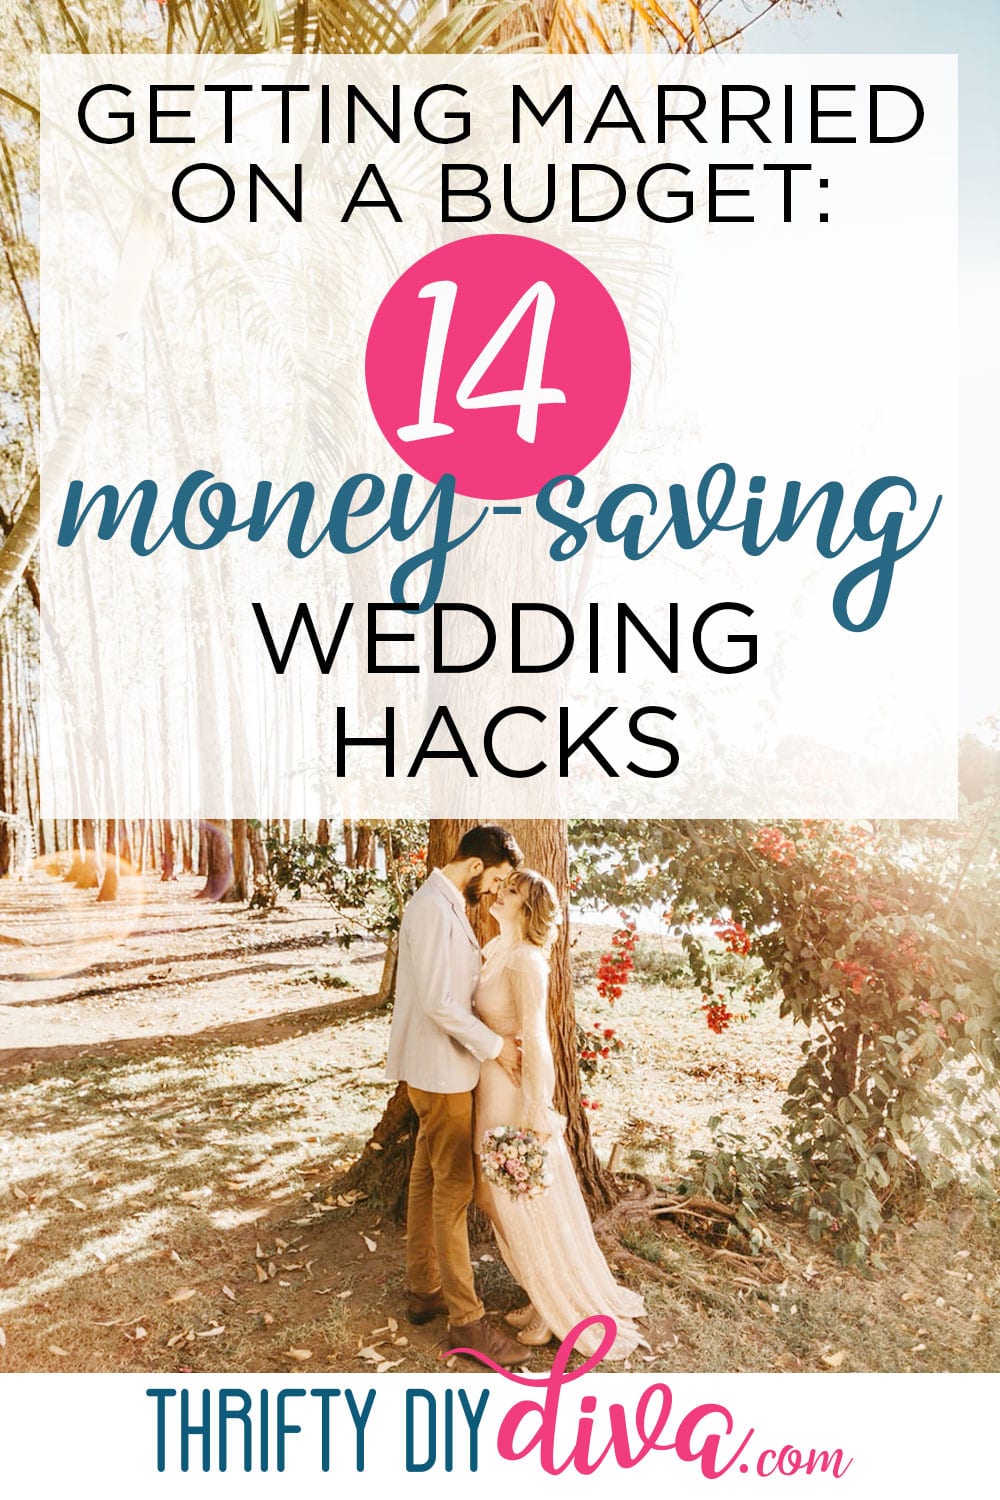 Getting Married on a Budget: 14 Money-Saving Wedding Hacks